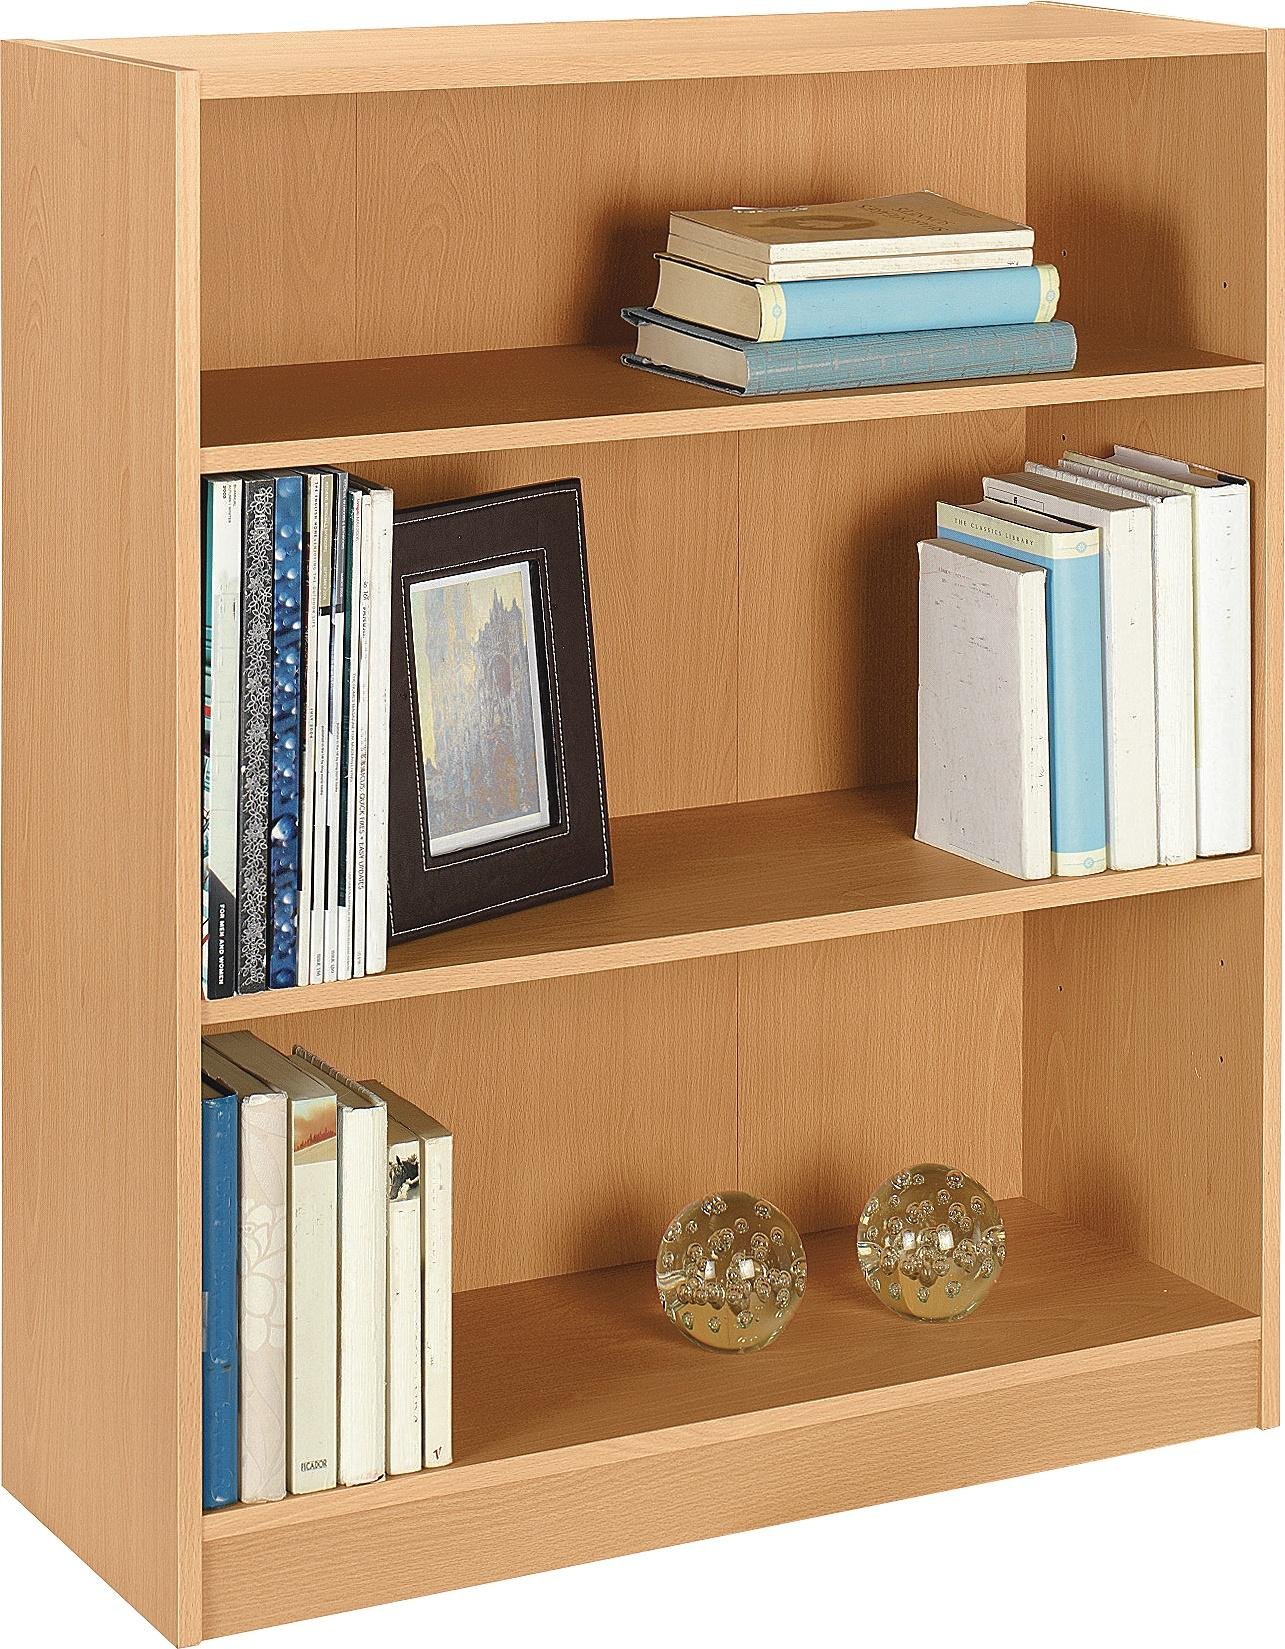 small shelf